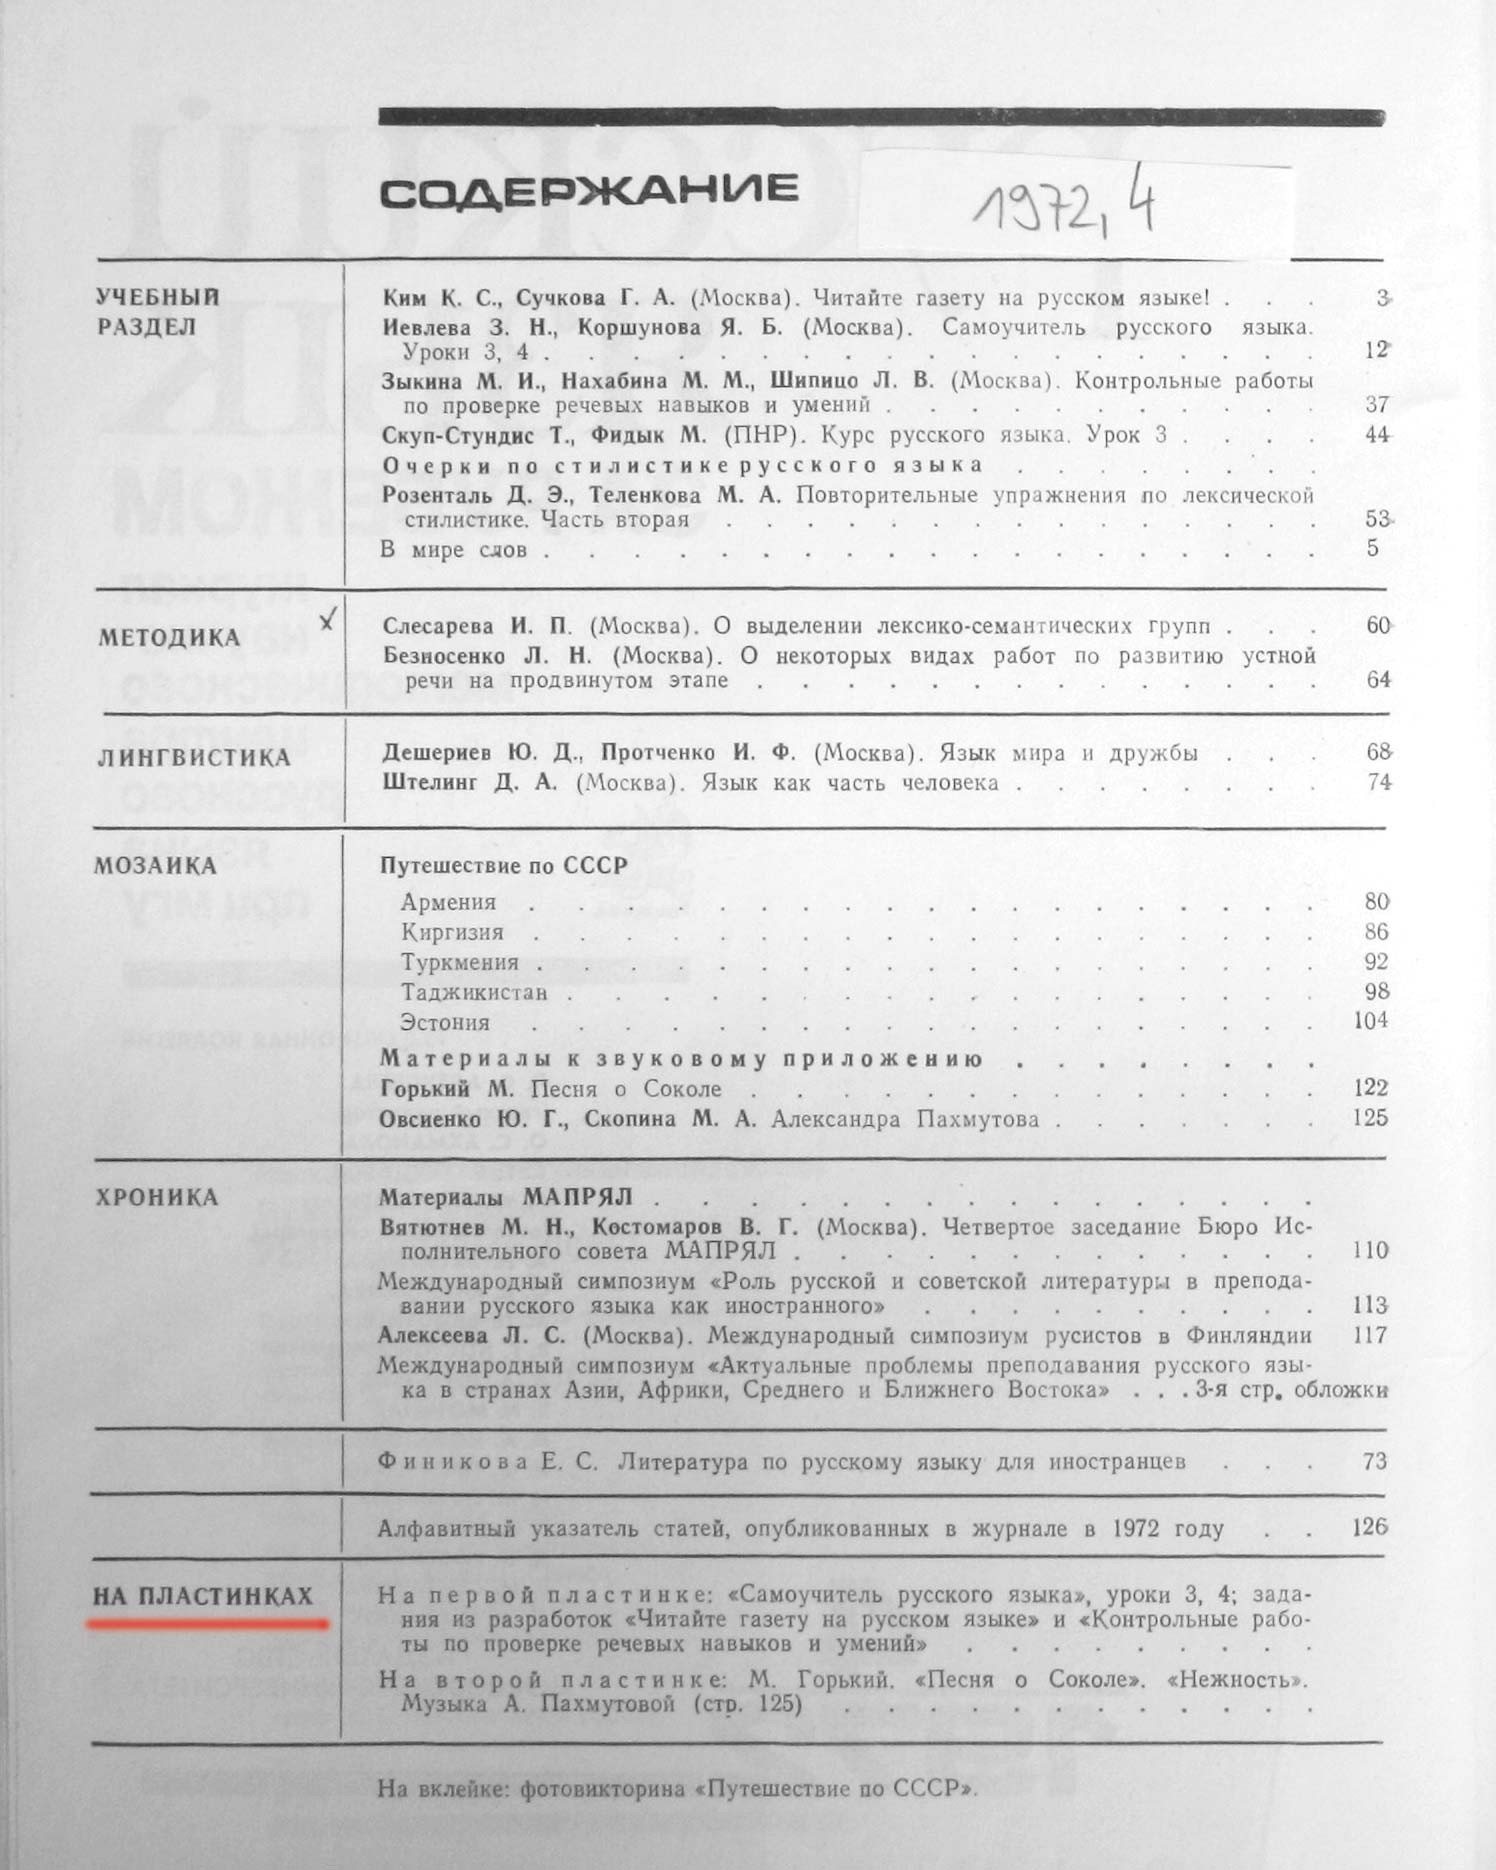 "РУССКИЙ ЯЗЫК ЗА РУБЕЖОМ", № 4 - 1972